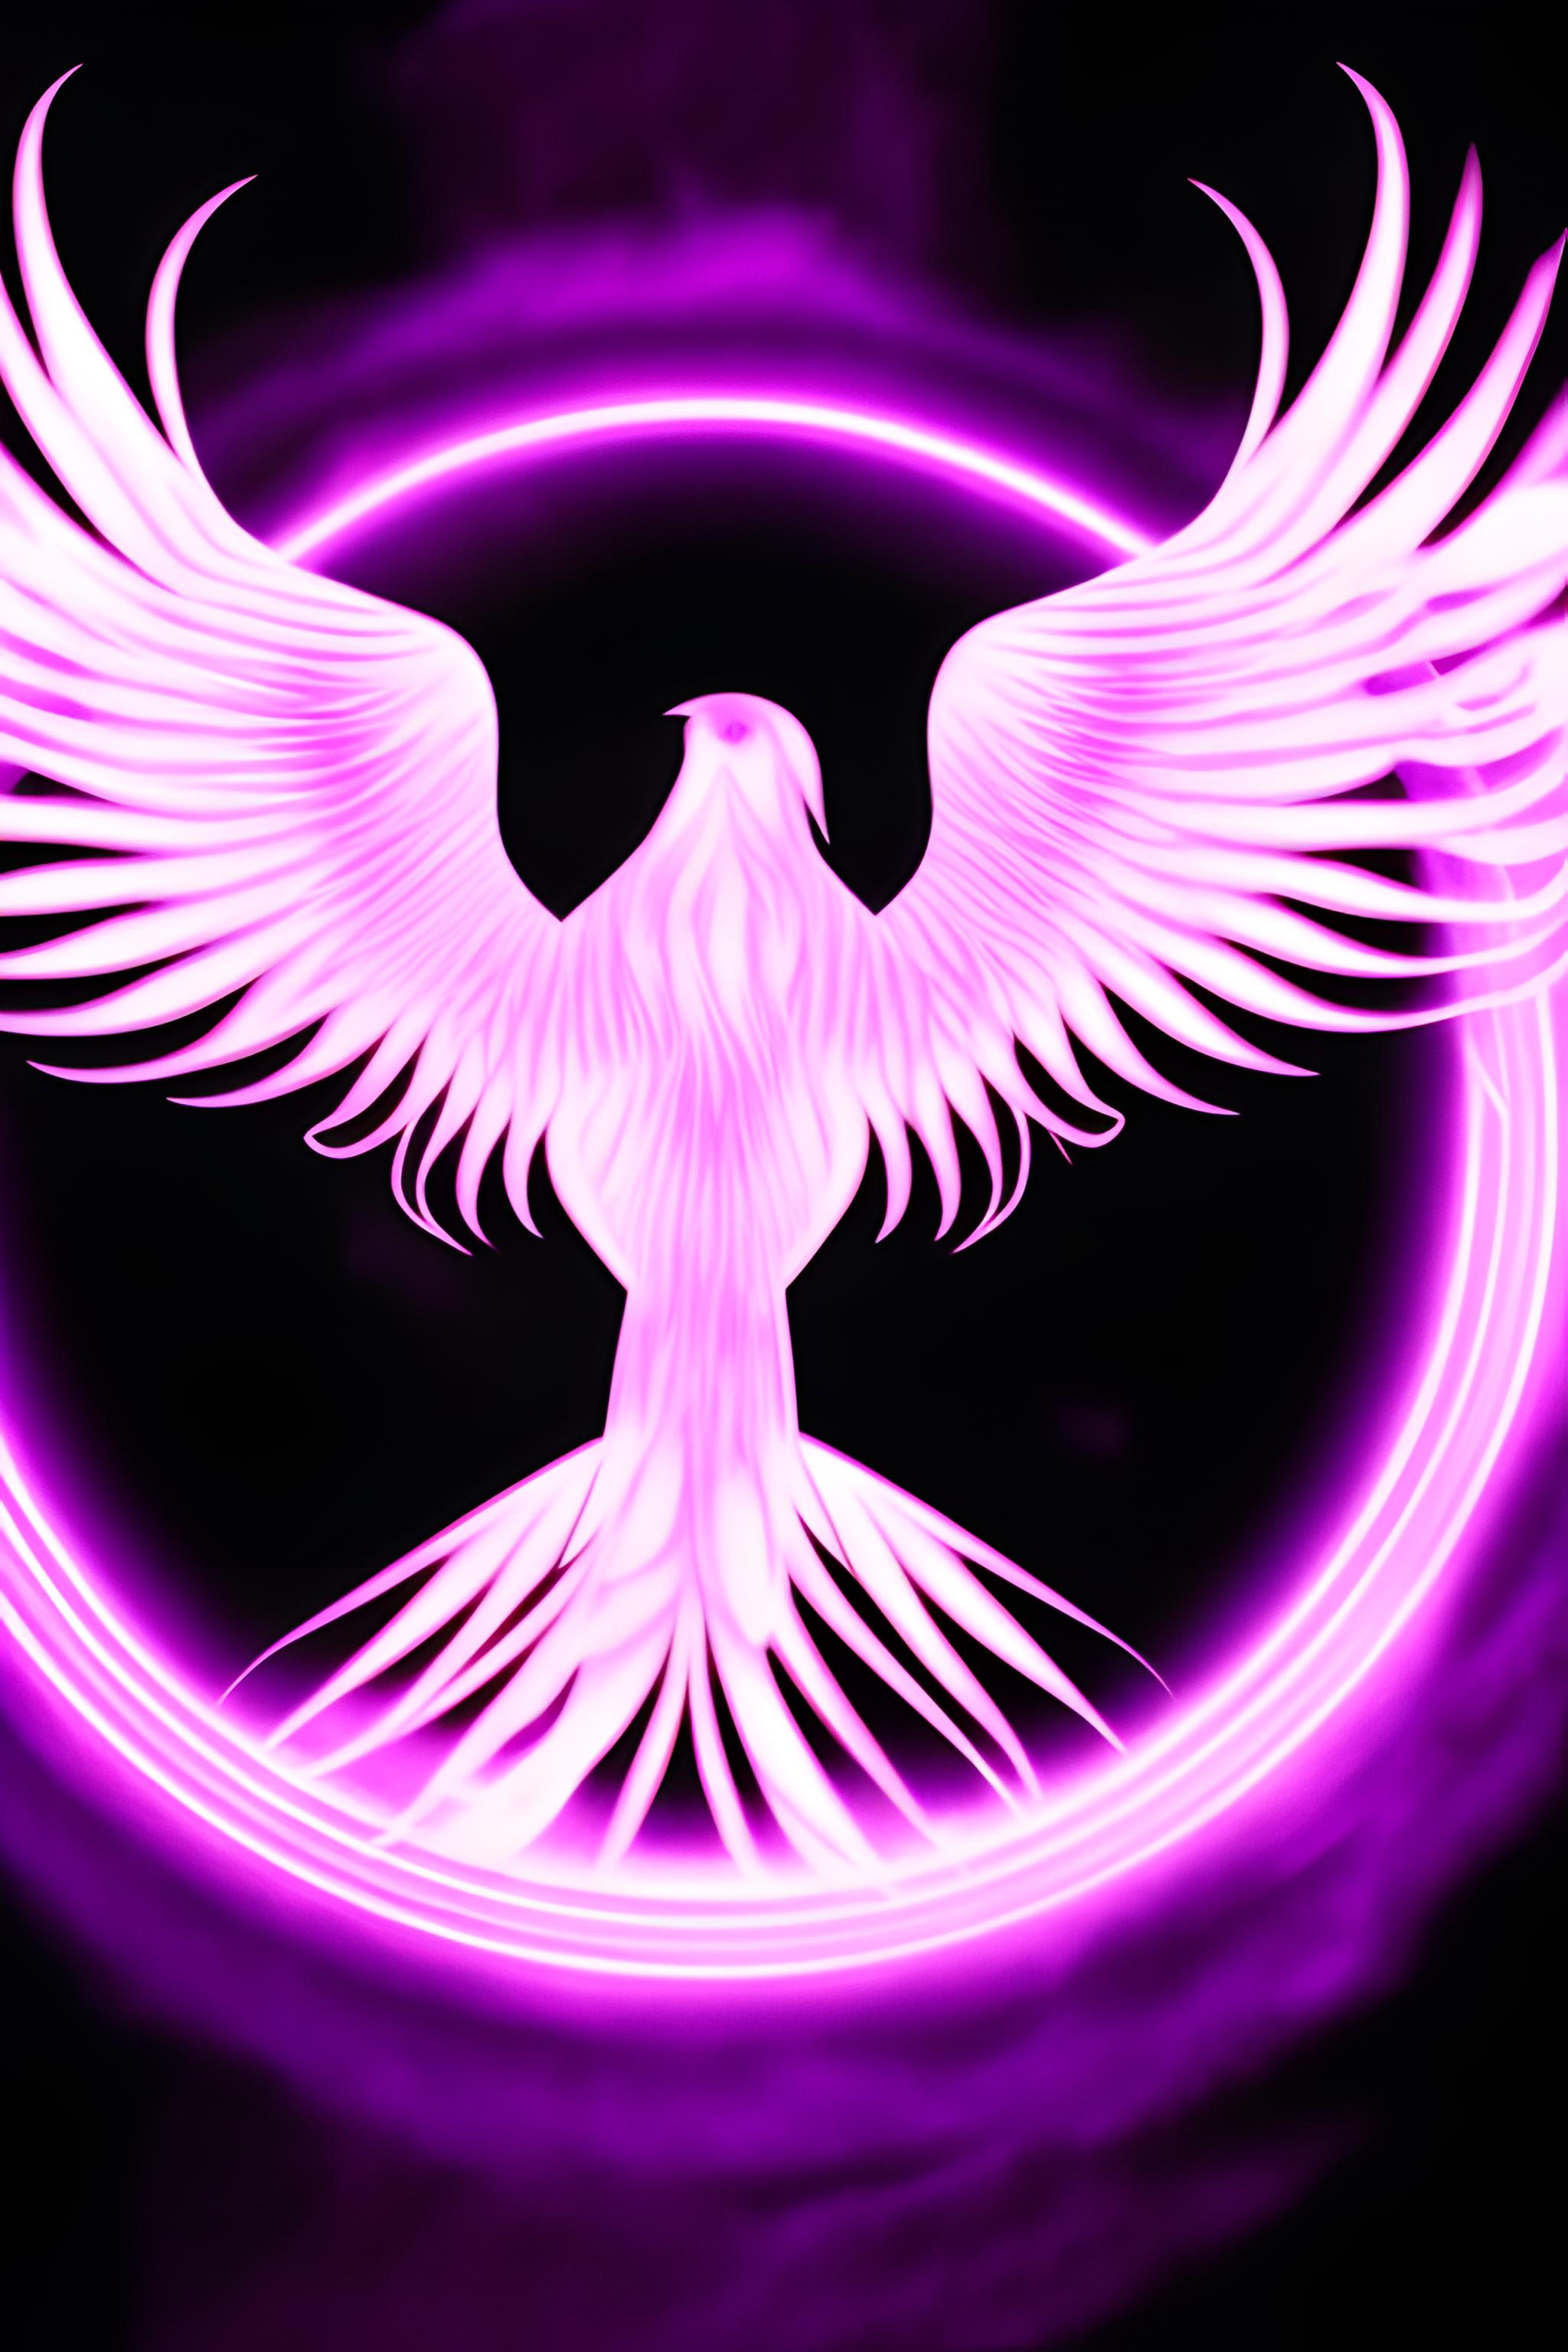 phoenix bird made of violet flames